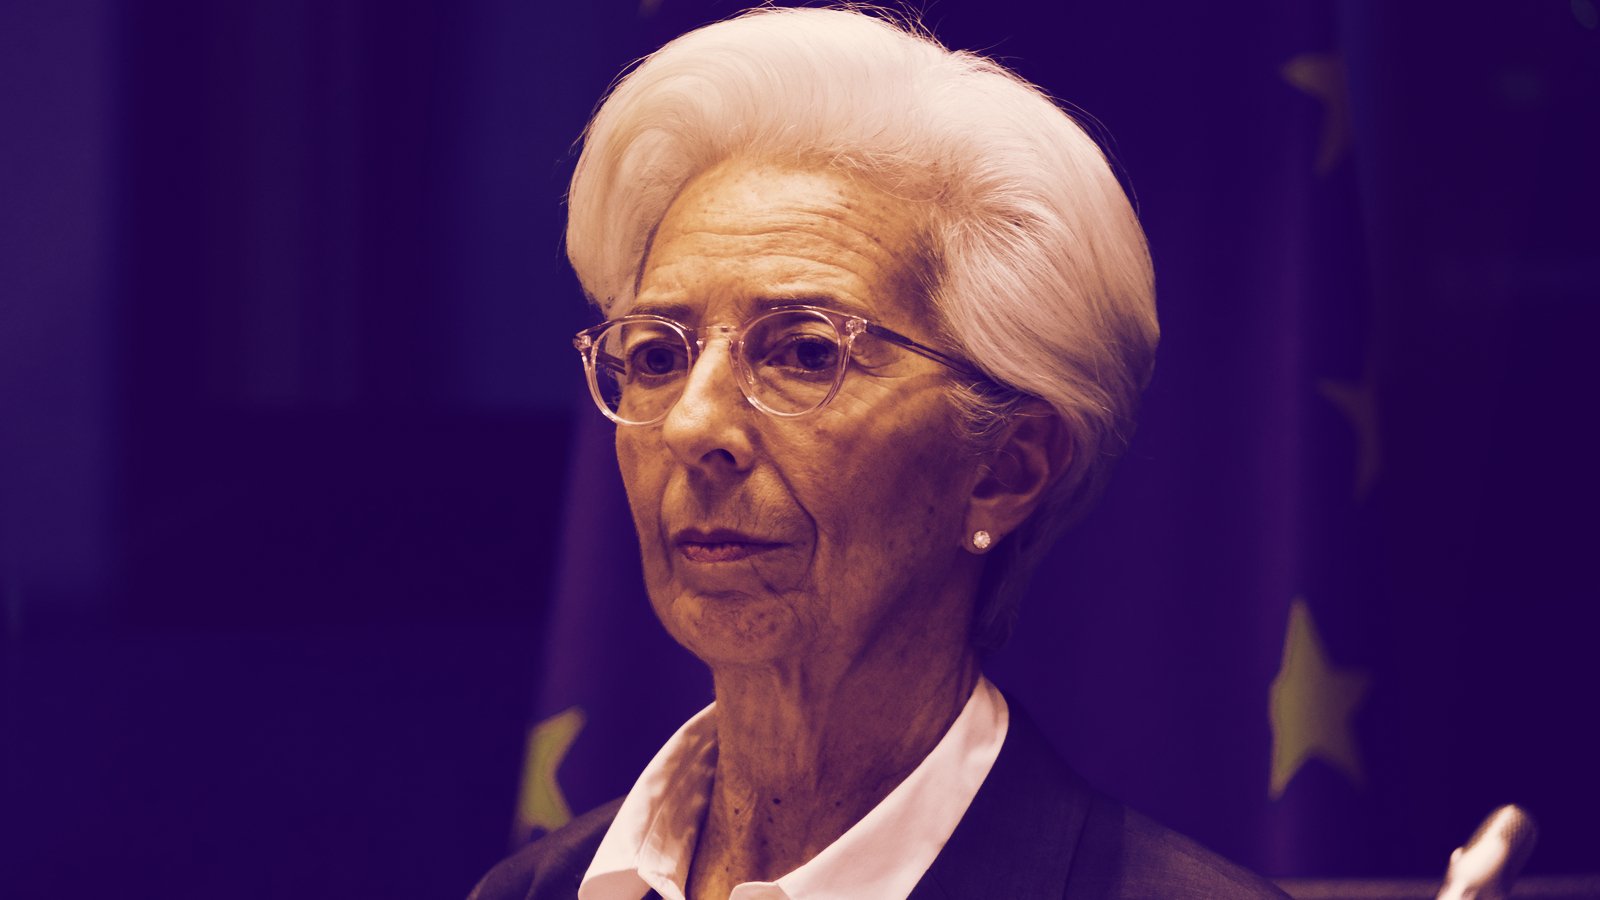 ECB Chief and Bitcoin Critic Christine Lagarde Says Her Son Trades Crypto